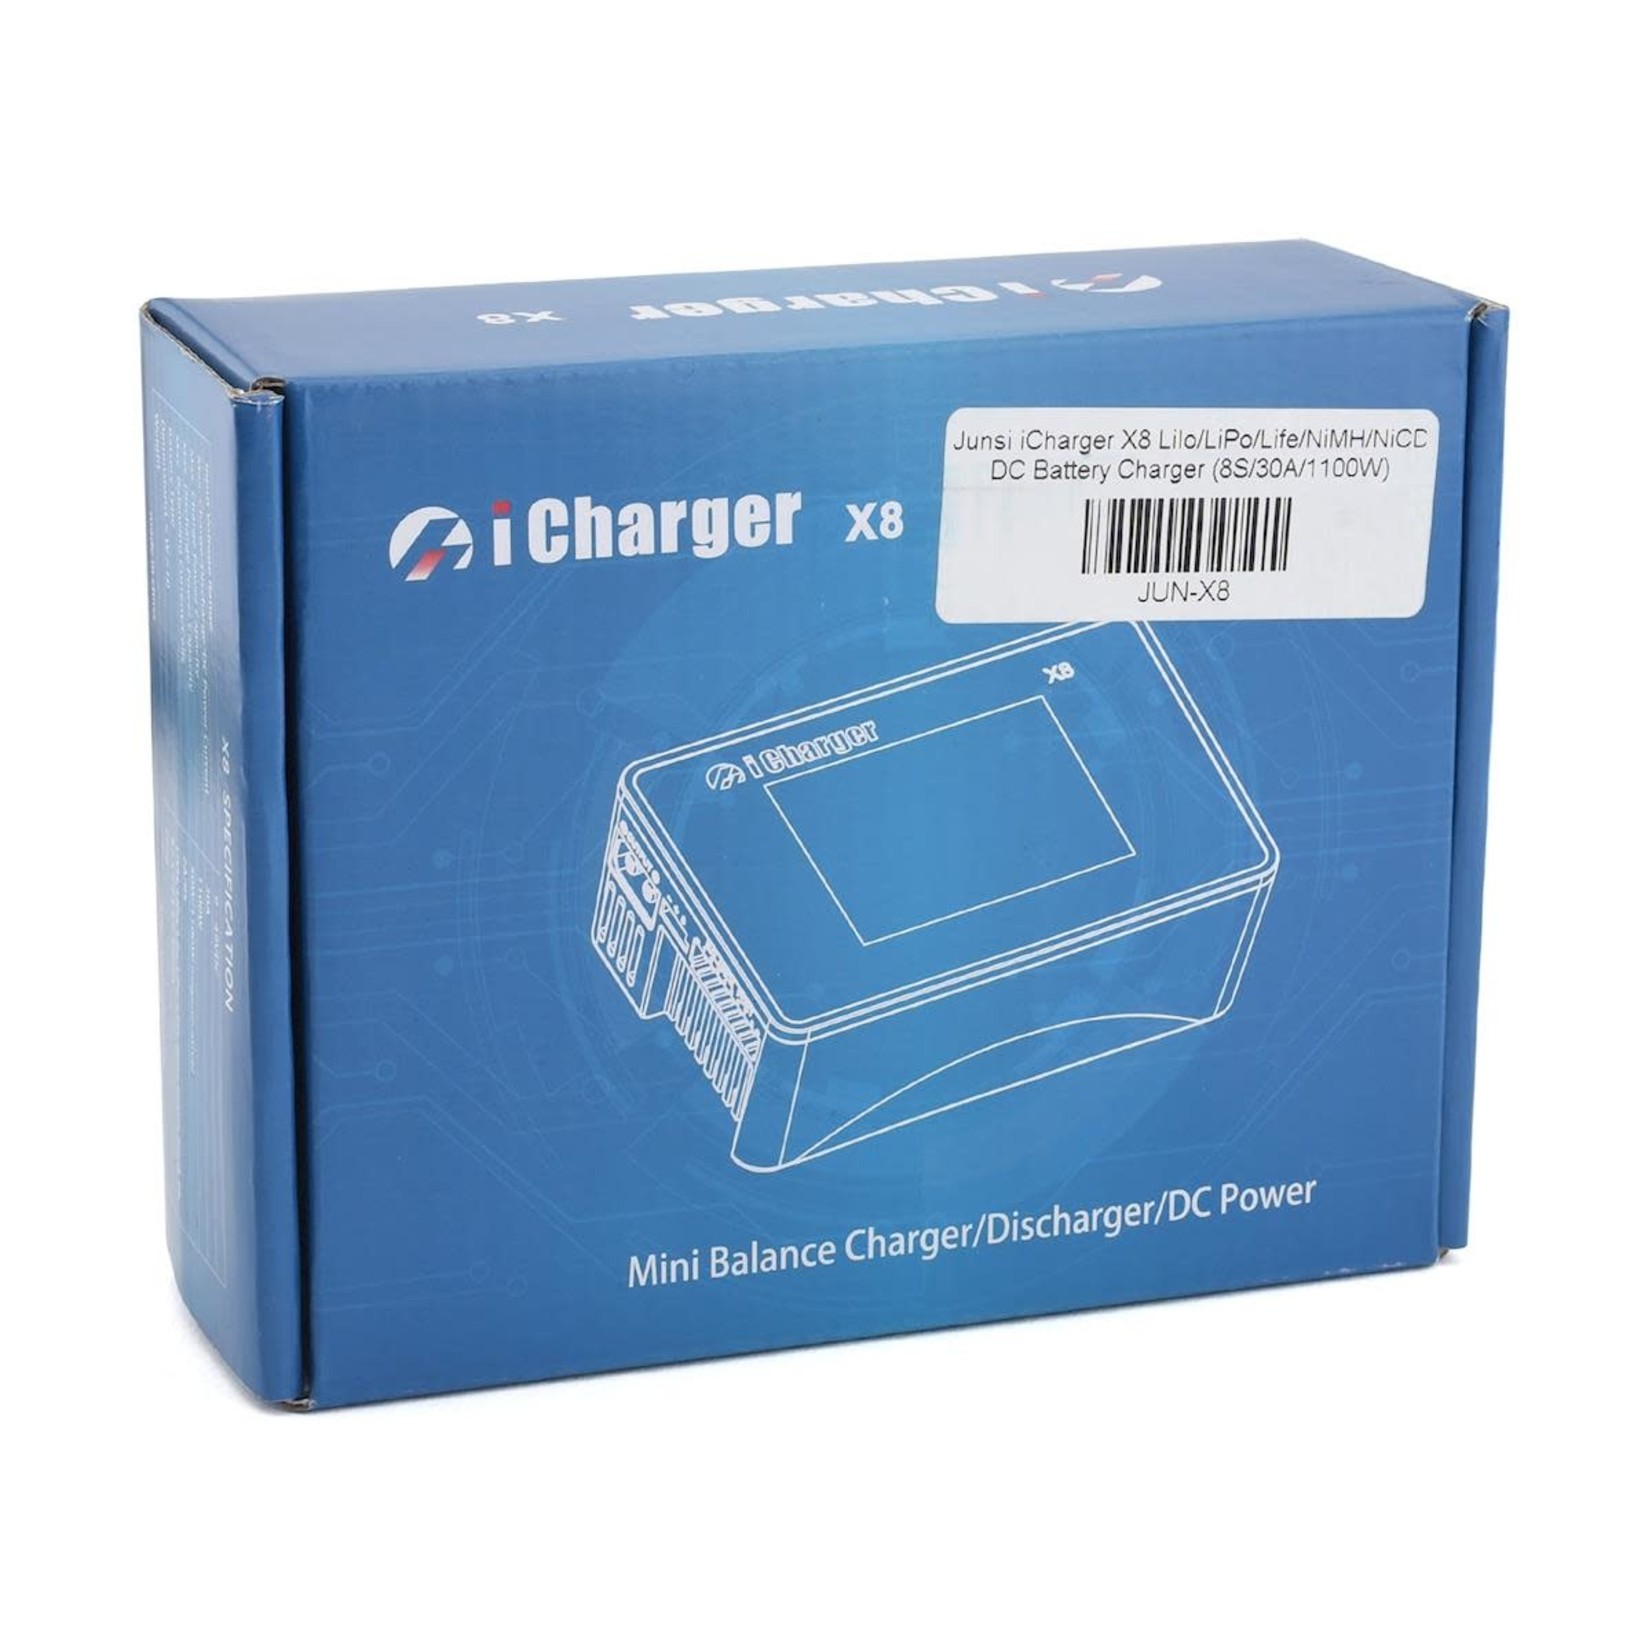 Junsi Junsi iCharger X8 Lilo/LiPo/Life/NiMH/NiCD DC Battery Charger (8S/30A/1100W) #JUN-X8